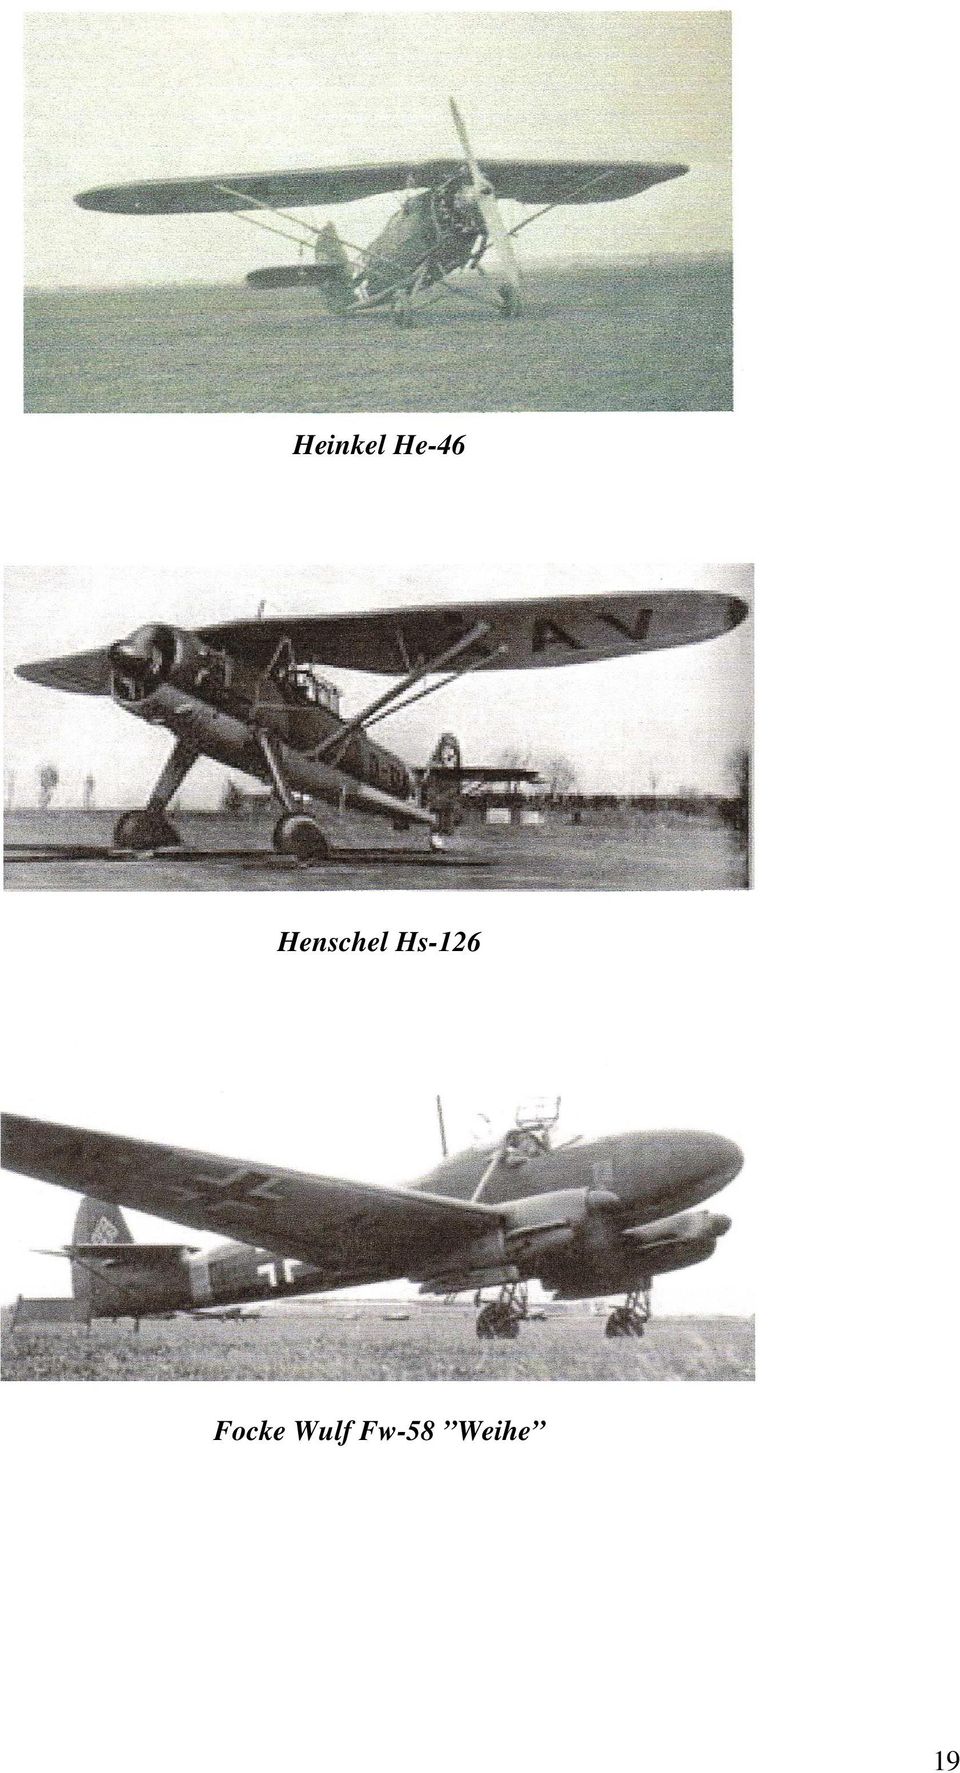 Hs-126 Focke